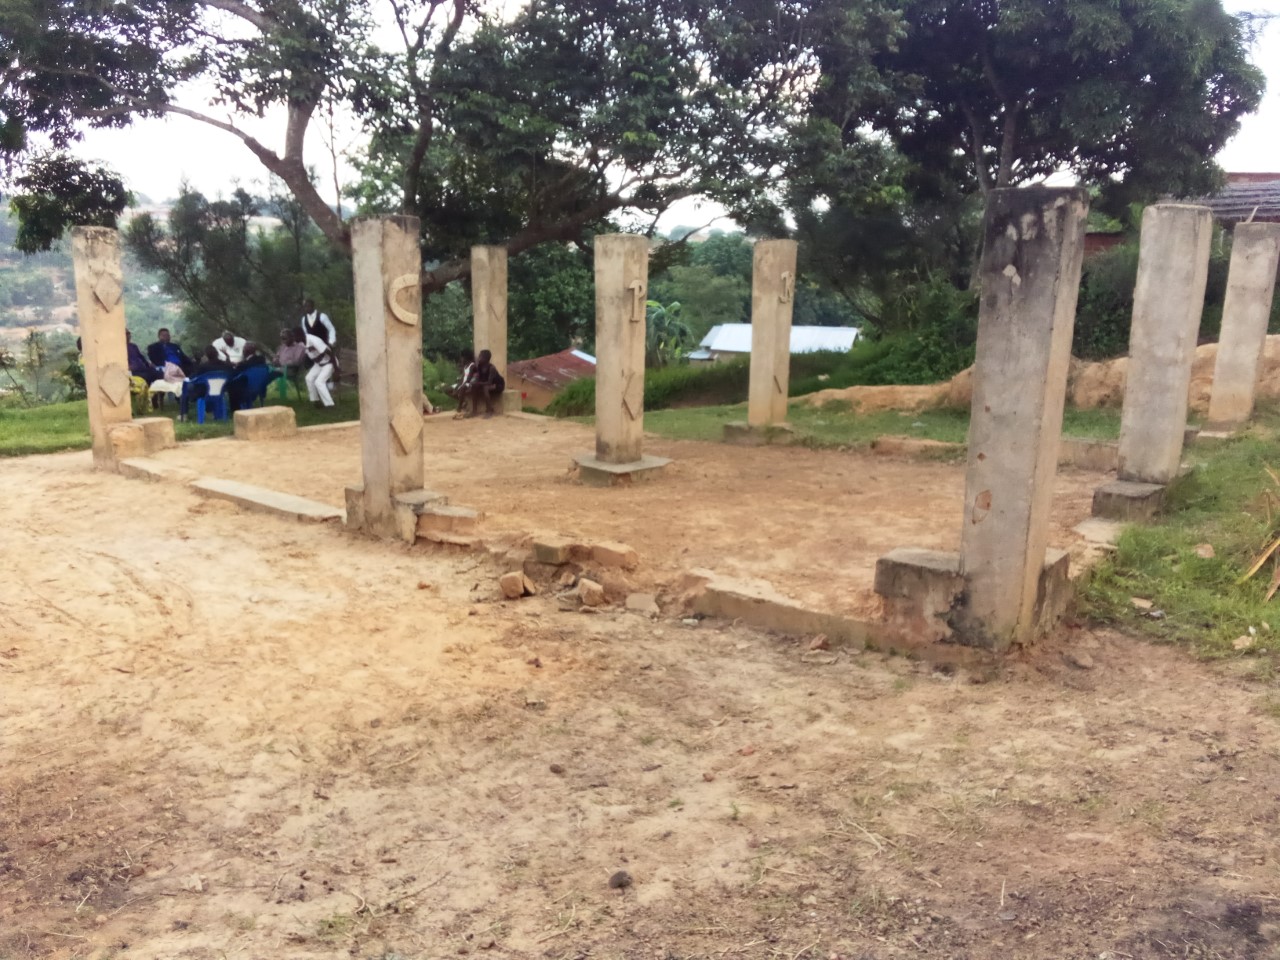 CPK Mbanza Ngungu that is covered by tarp for Sunday worship. Photo by Pastor Isaac Kalonji.